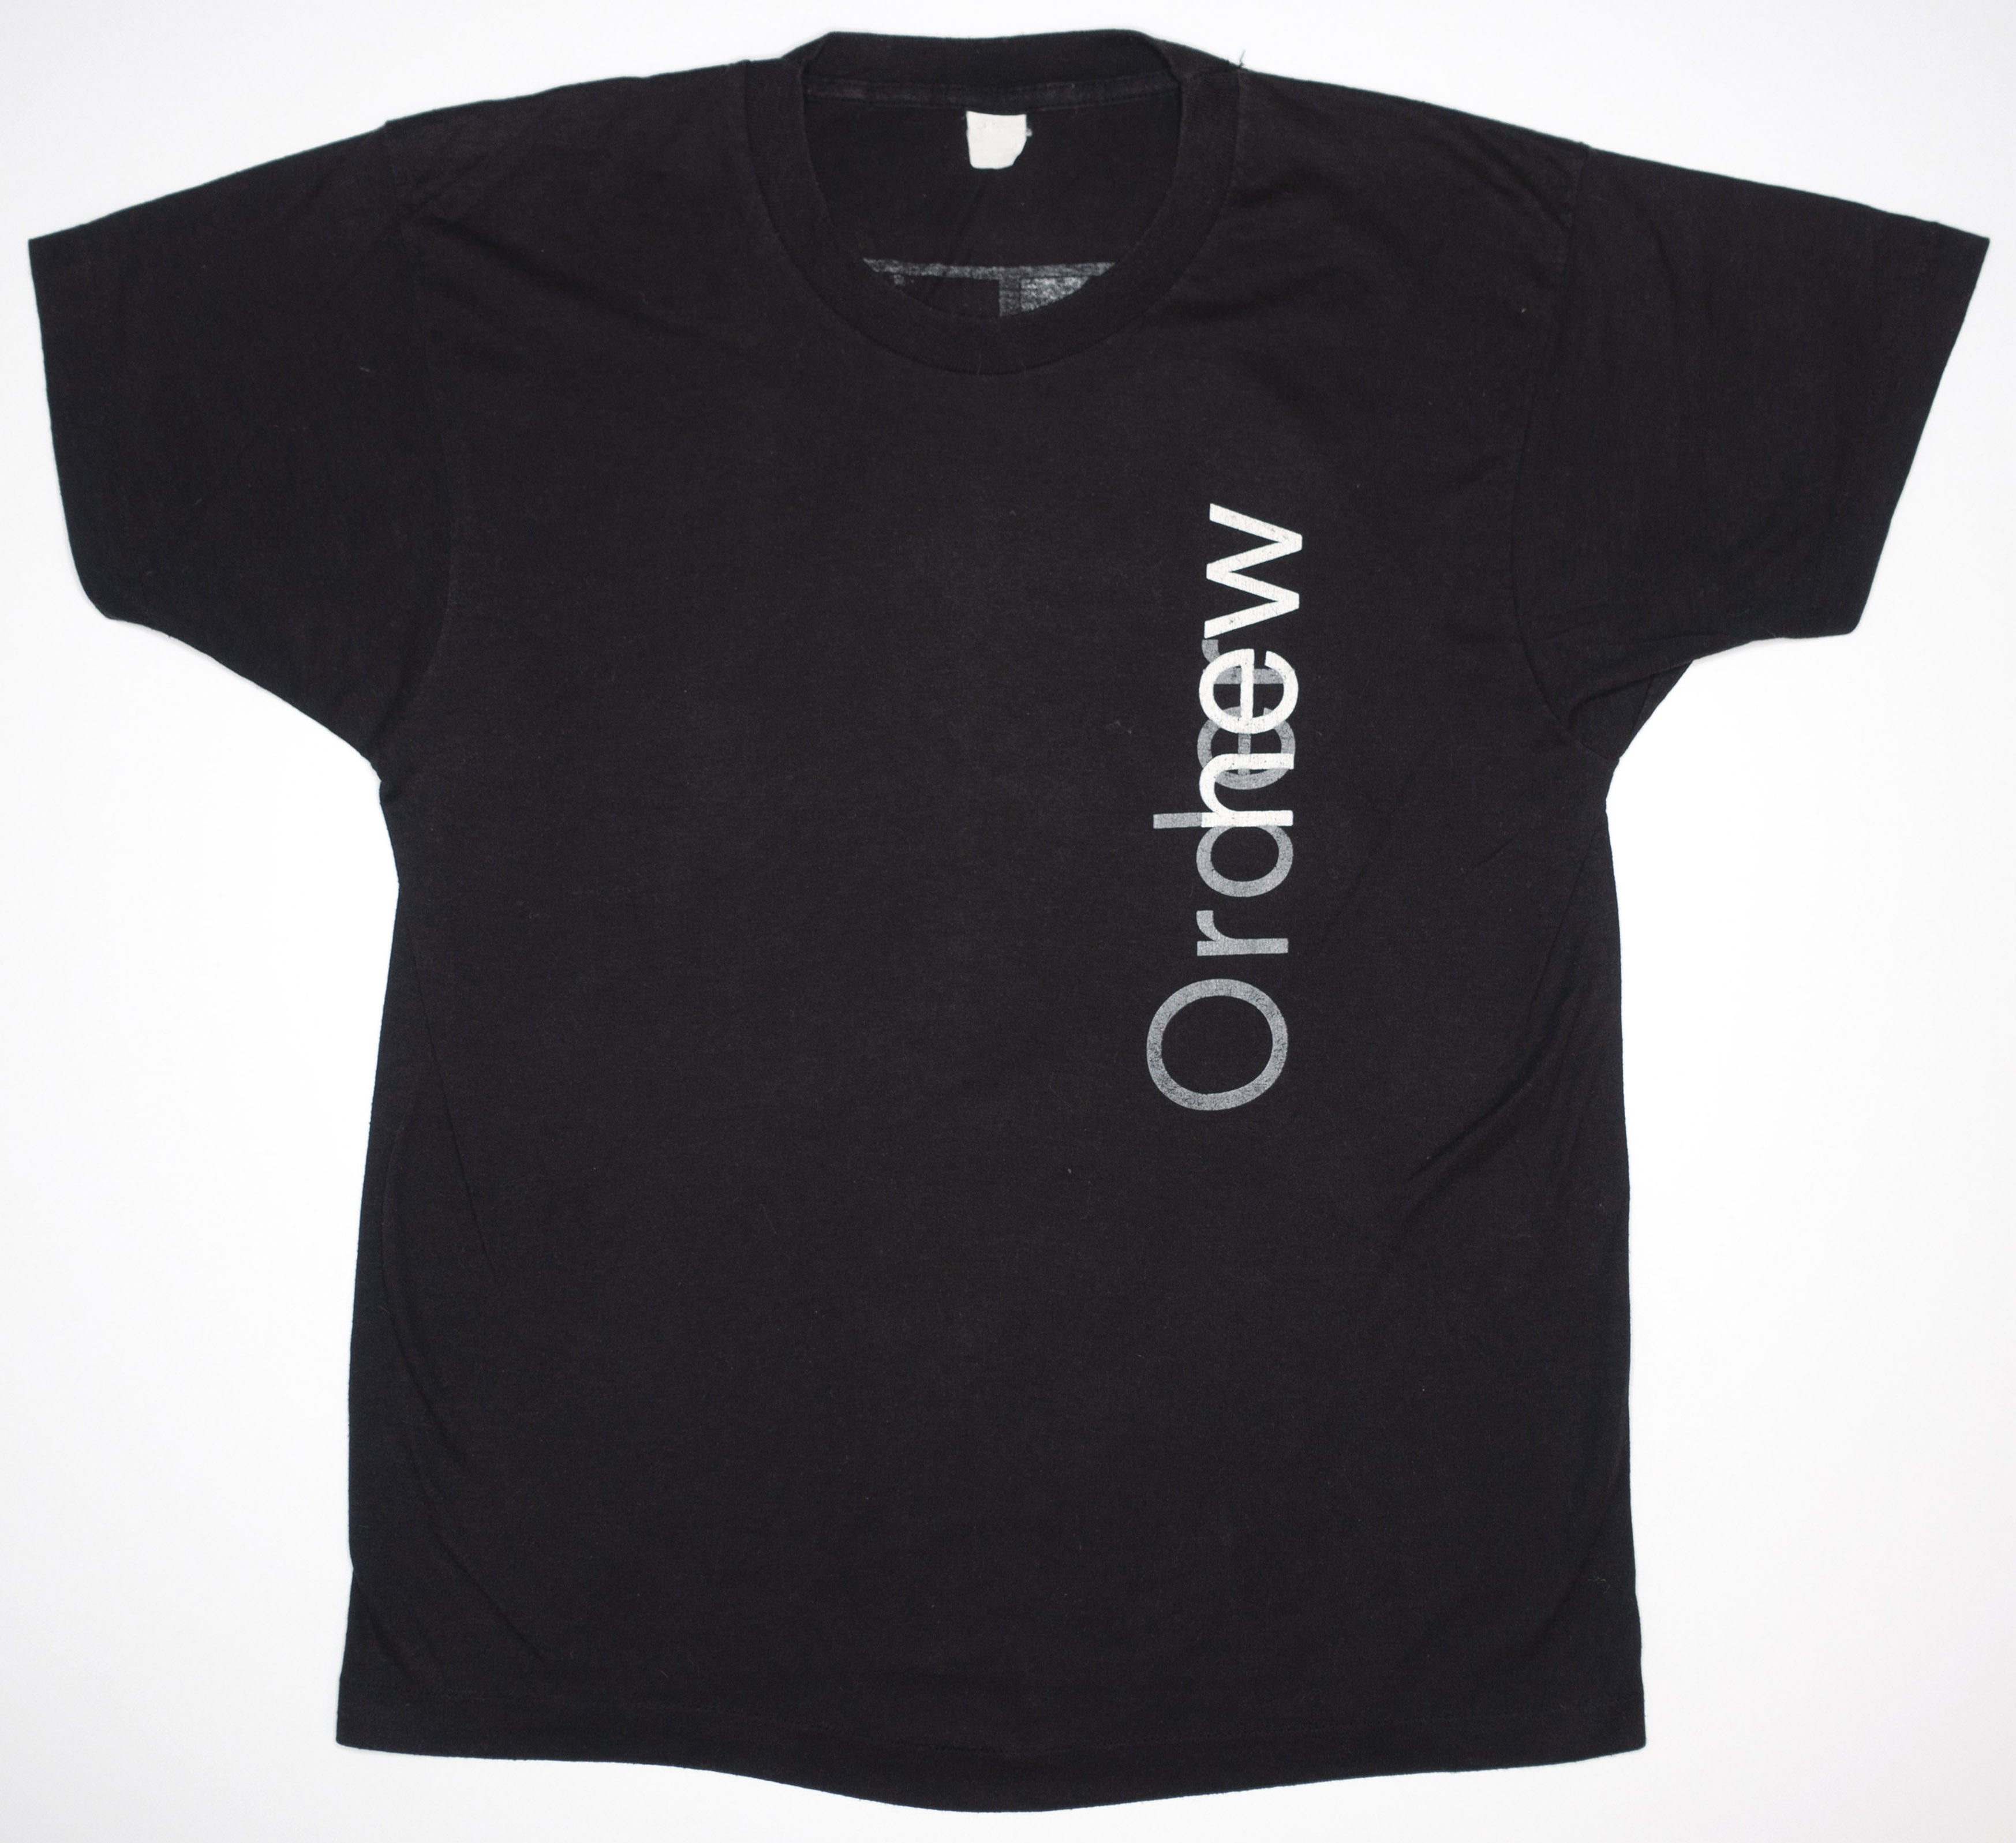 New Order - Low-Life 1985 Tour Shirt Size Large (Black)